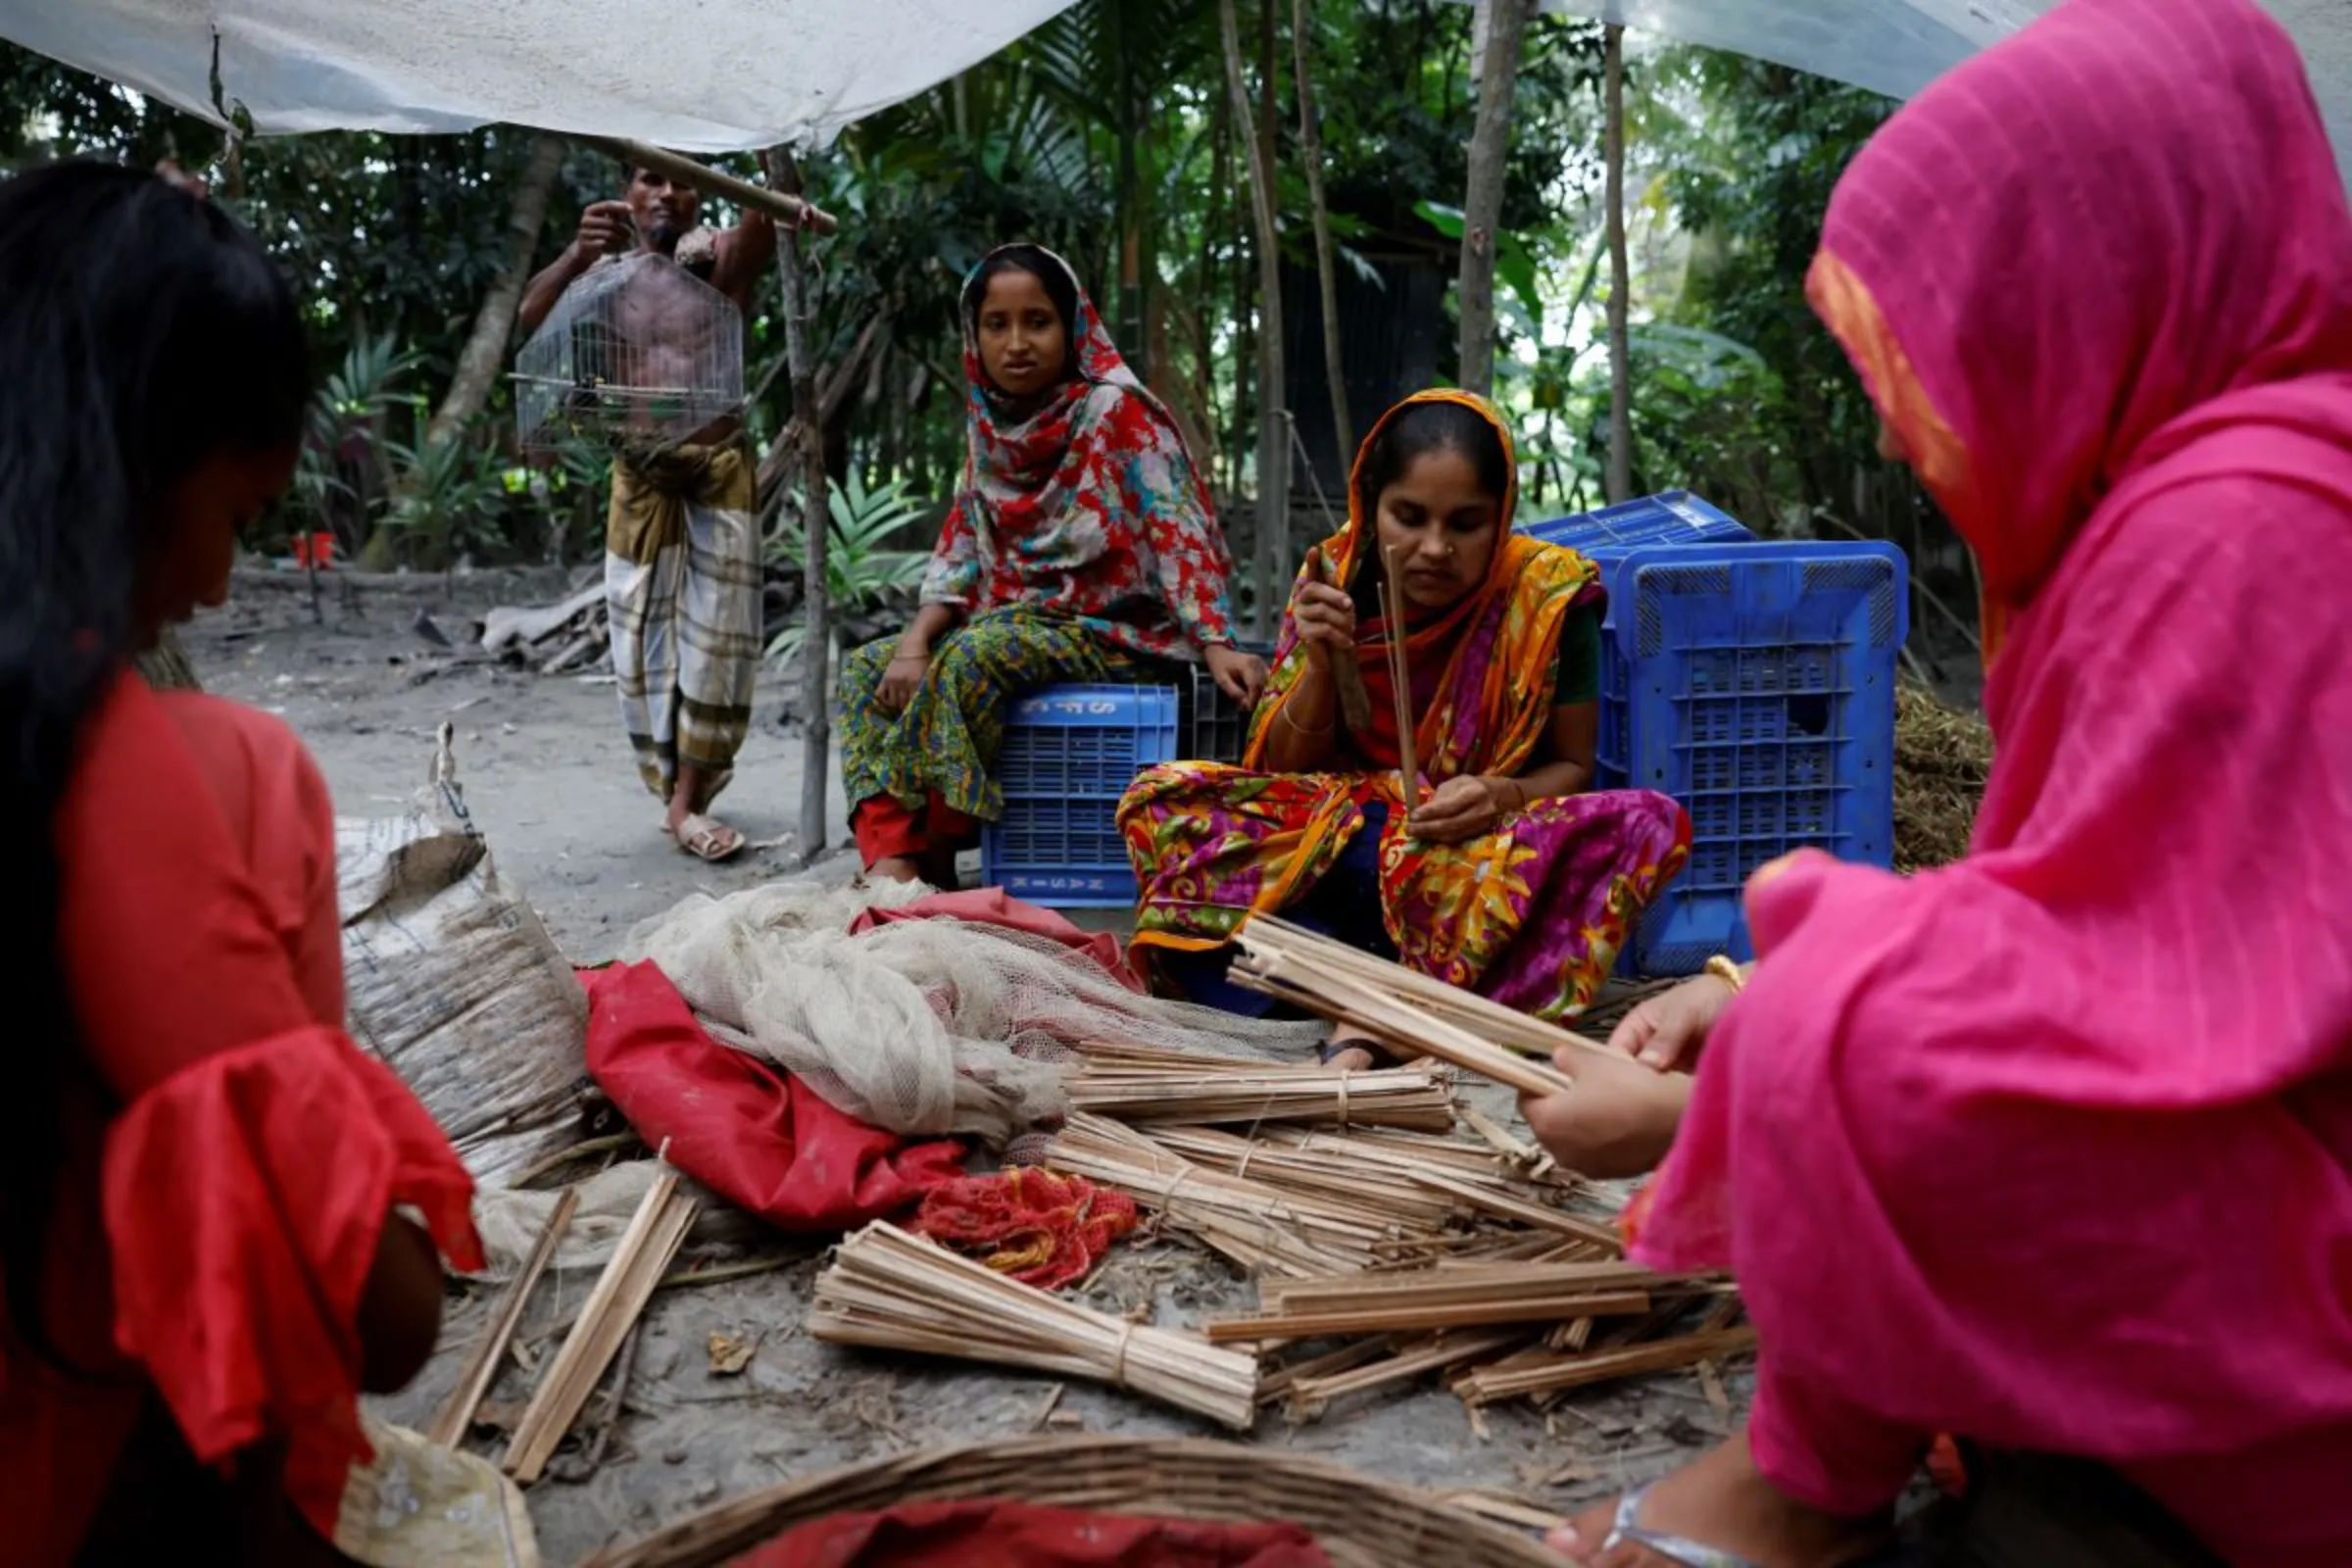 Bangladeshi women cut leaves into thin pieces at their home in Pirojpur, Bangladesh, August 18, 2022. REUTERS/Mohammad Ponir Hossain